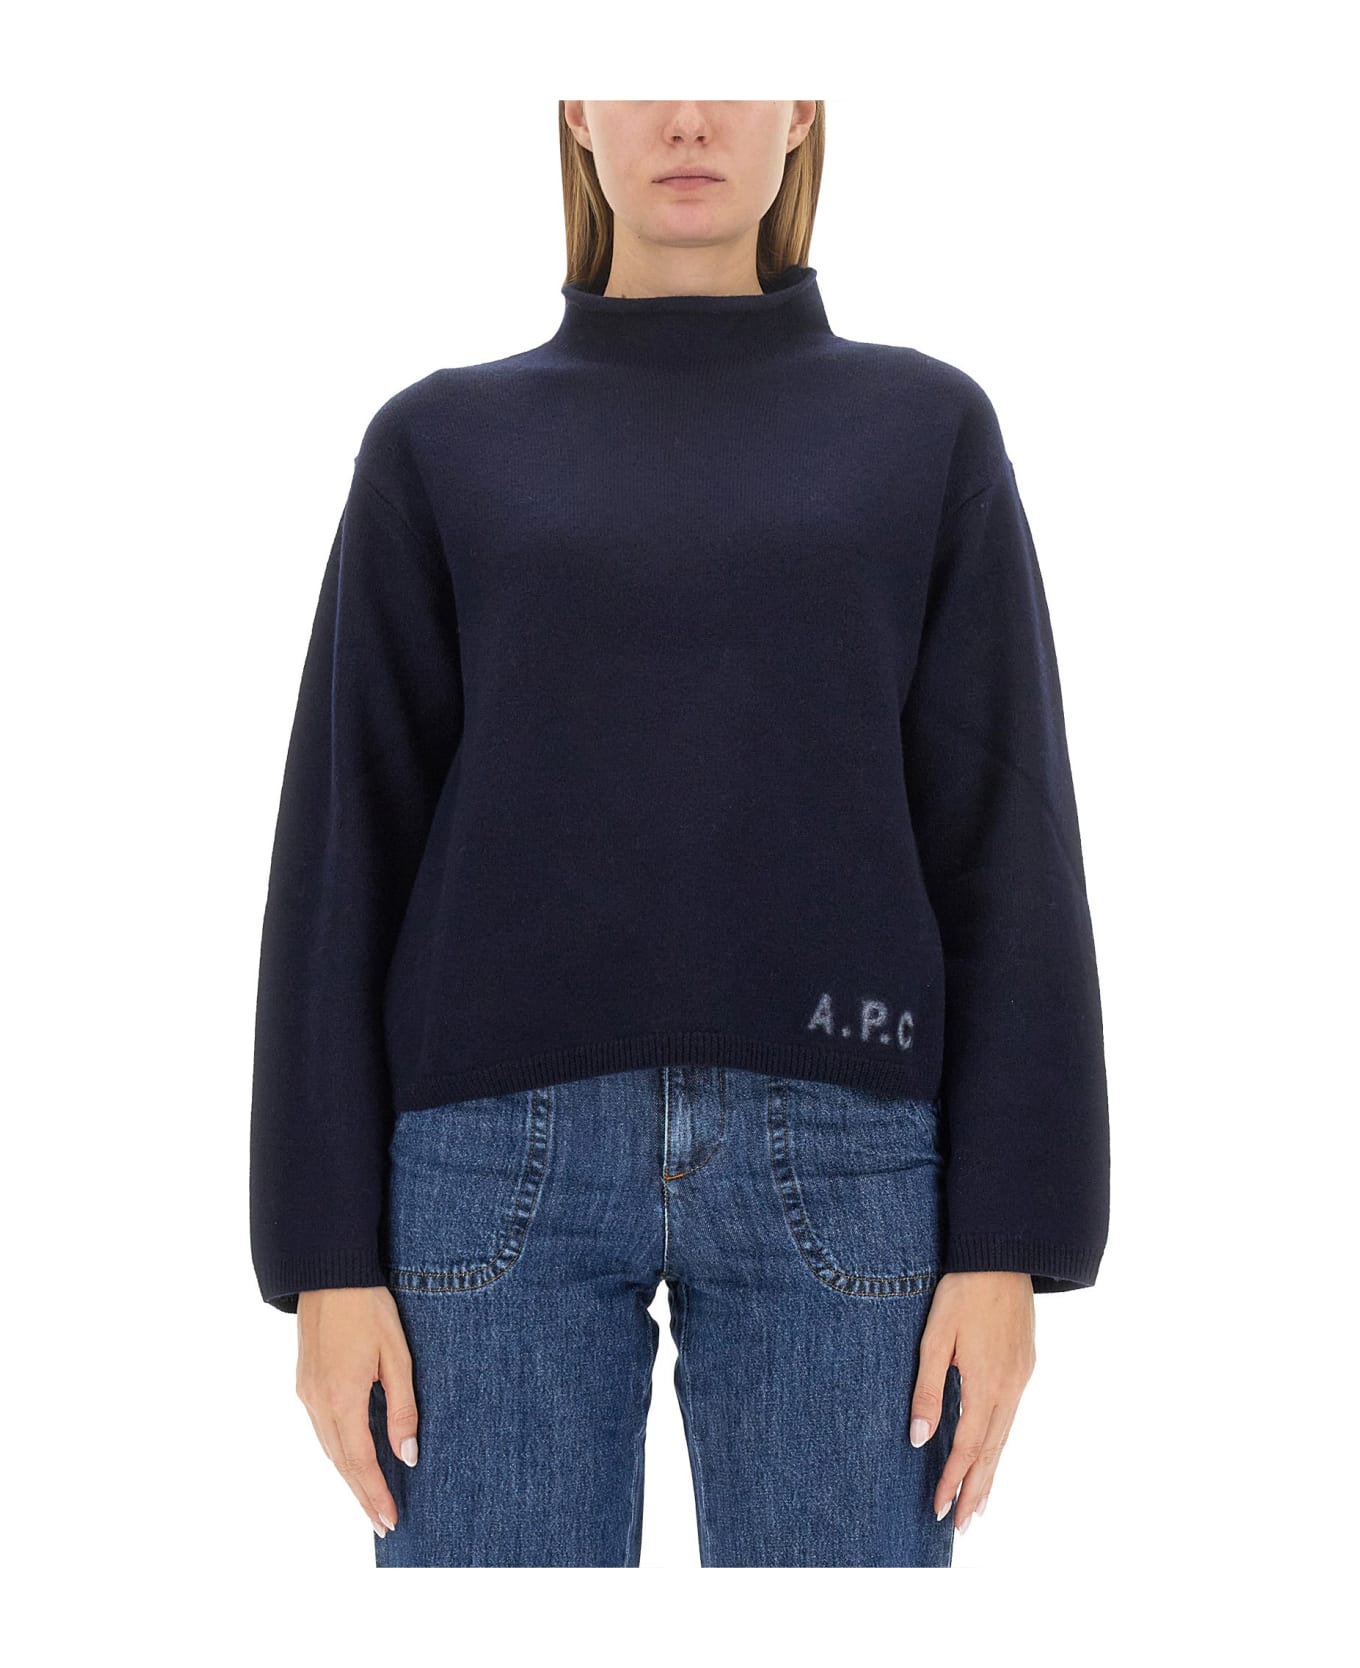 A.P.C. Oda Sweater - blue